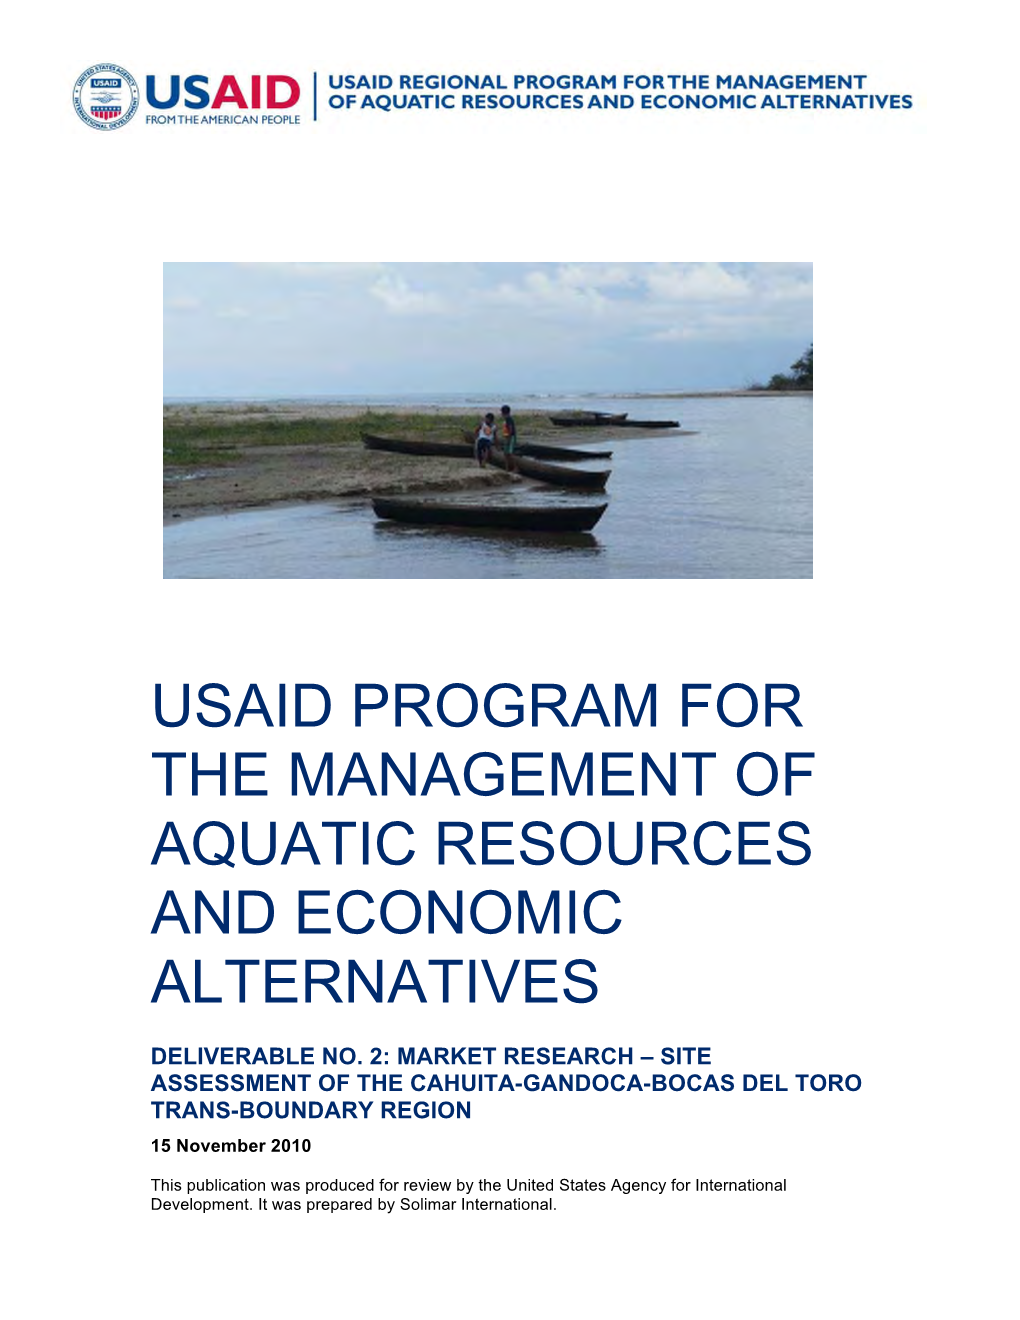 Usaid Program for the Management of Aquatic Resources and Economic Alternatives